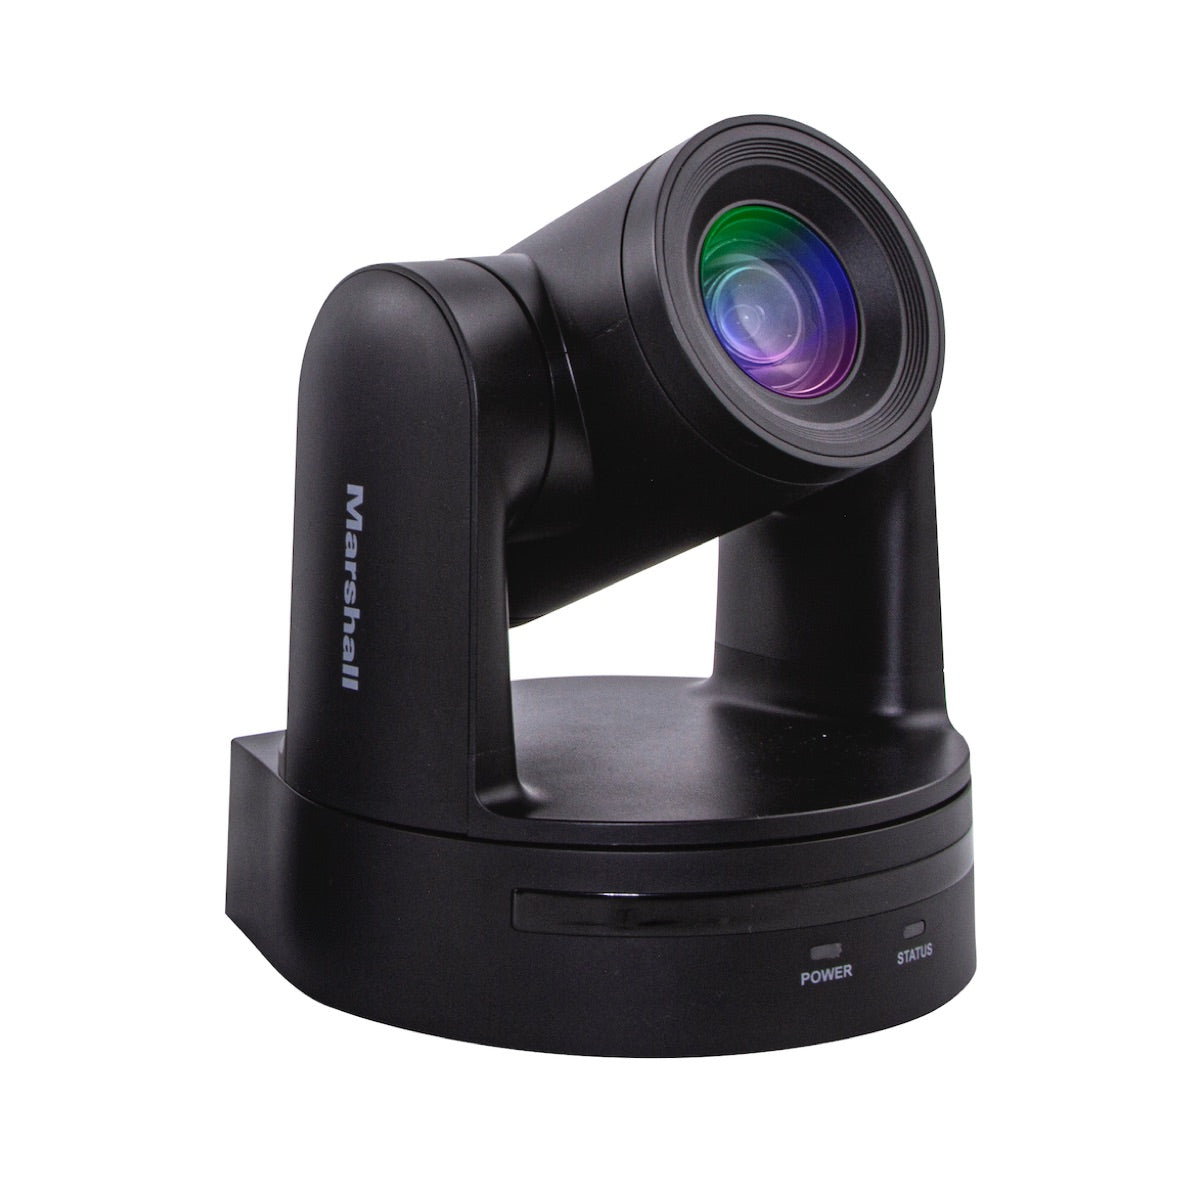 Marshall CV605-BK - 5x HD60 IP PTZ Video Camera, black, angle